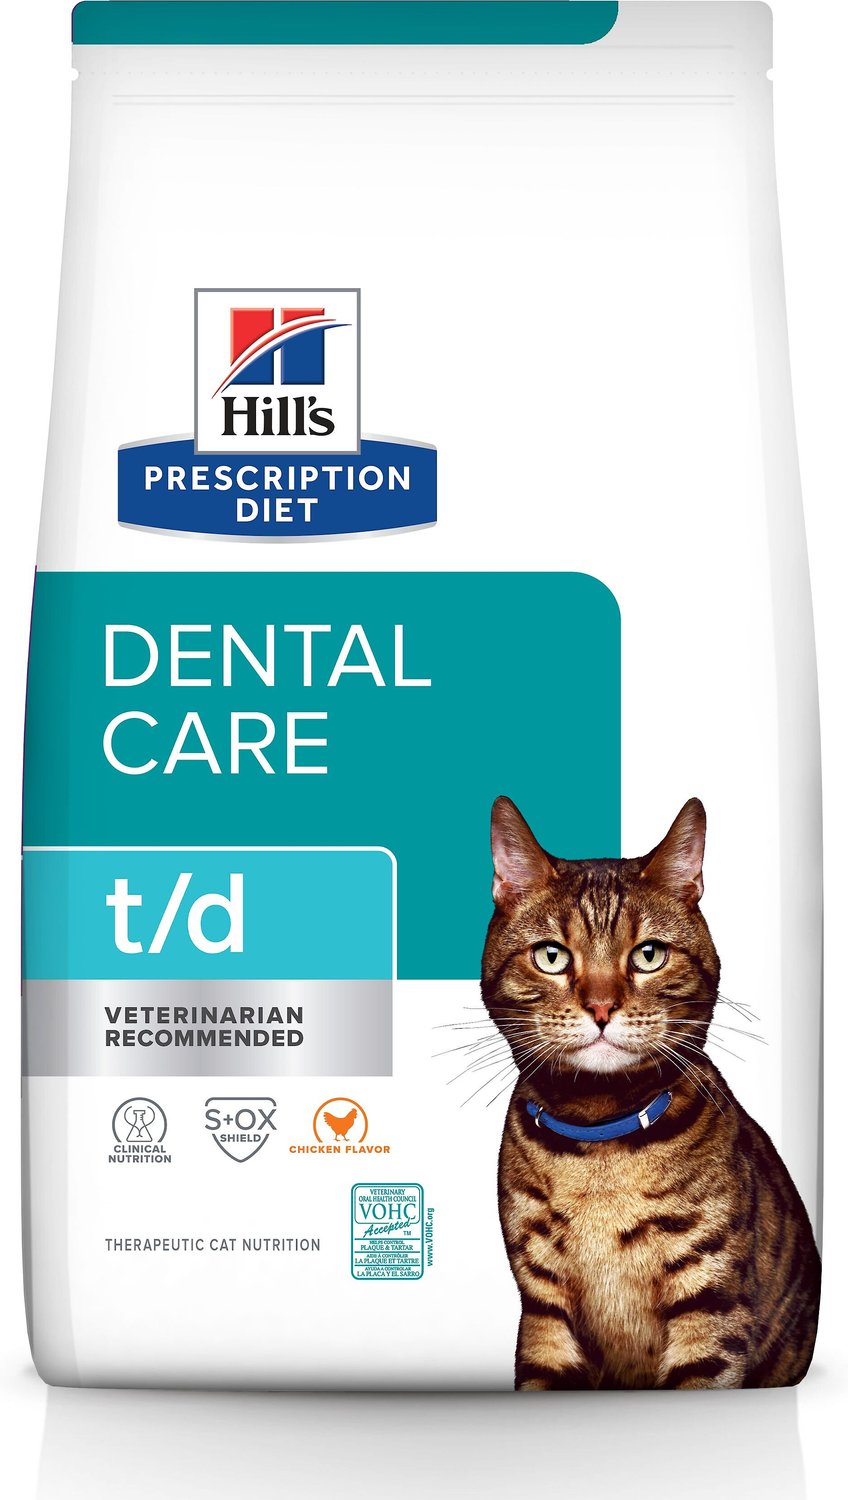 hills dental care cat food